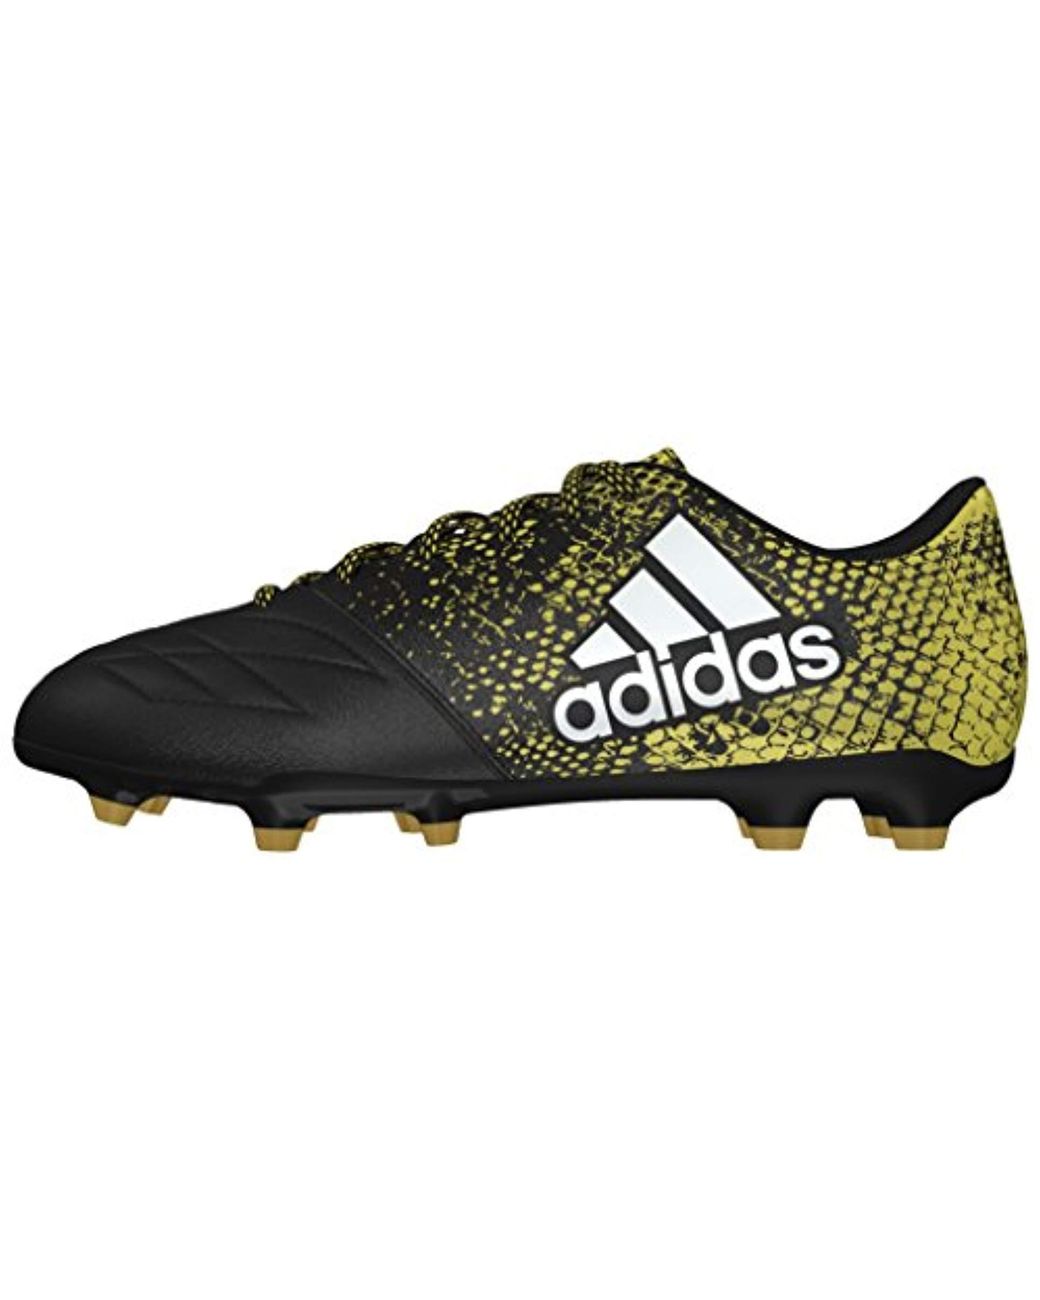 Shoes Bags Adidas X 16 3 Fg Leather Men S Calcio Allenamento